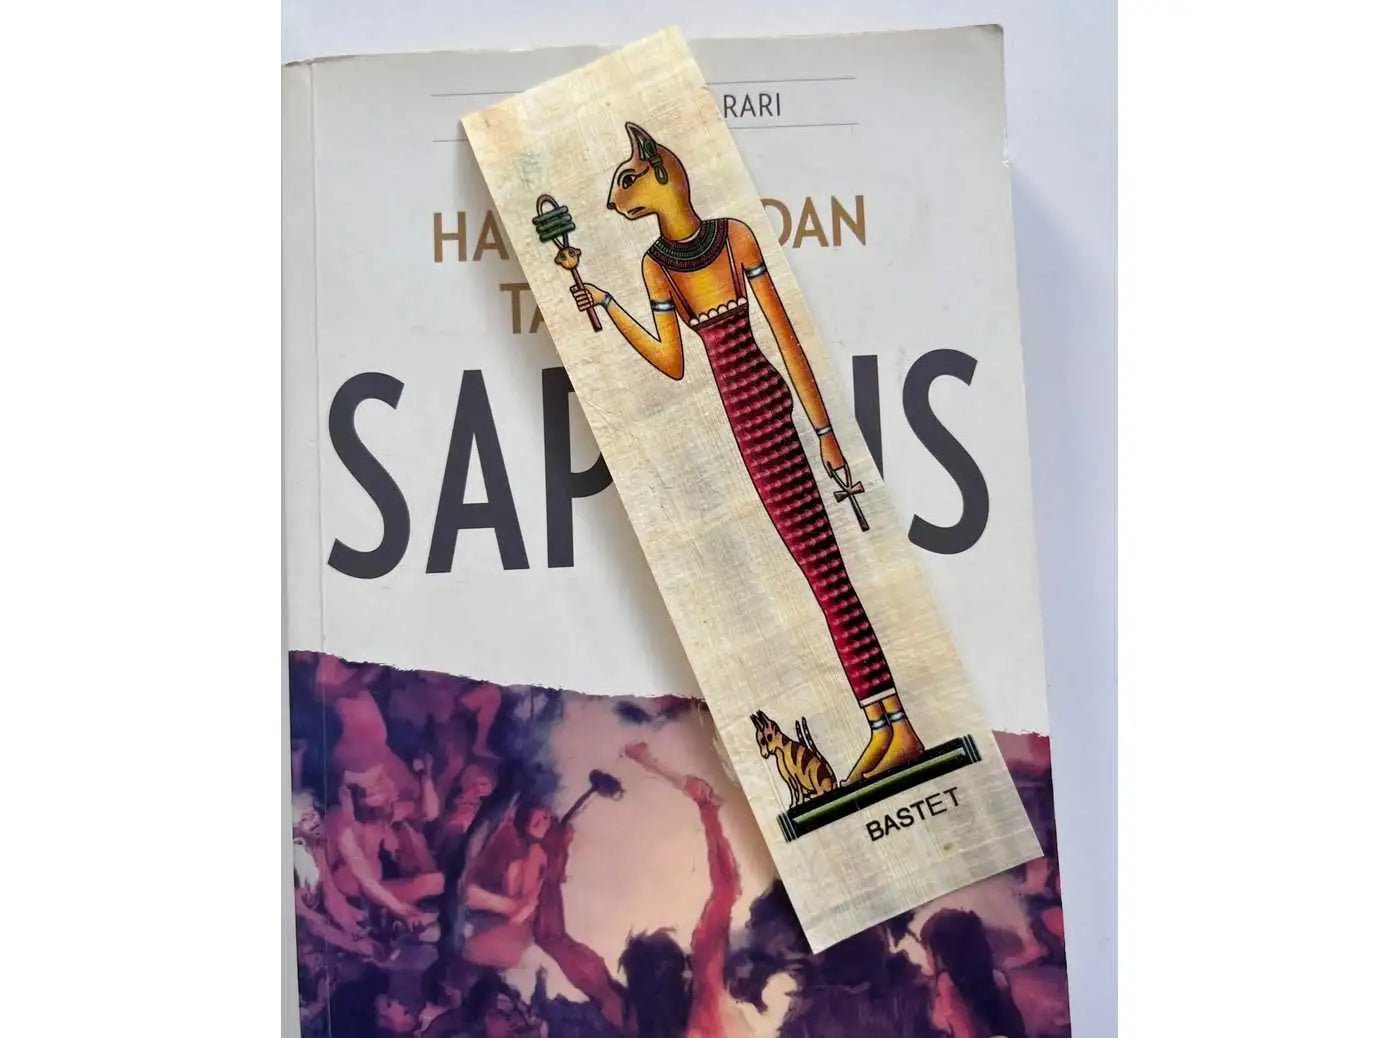 BASTET Bookmark - The Fierce Feline Goddess of Protection - Egyptian Bookmarks History Educational - 1.75x6.90 inches - Free Shipping